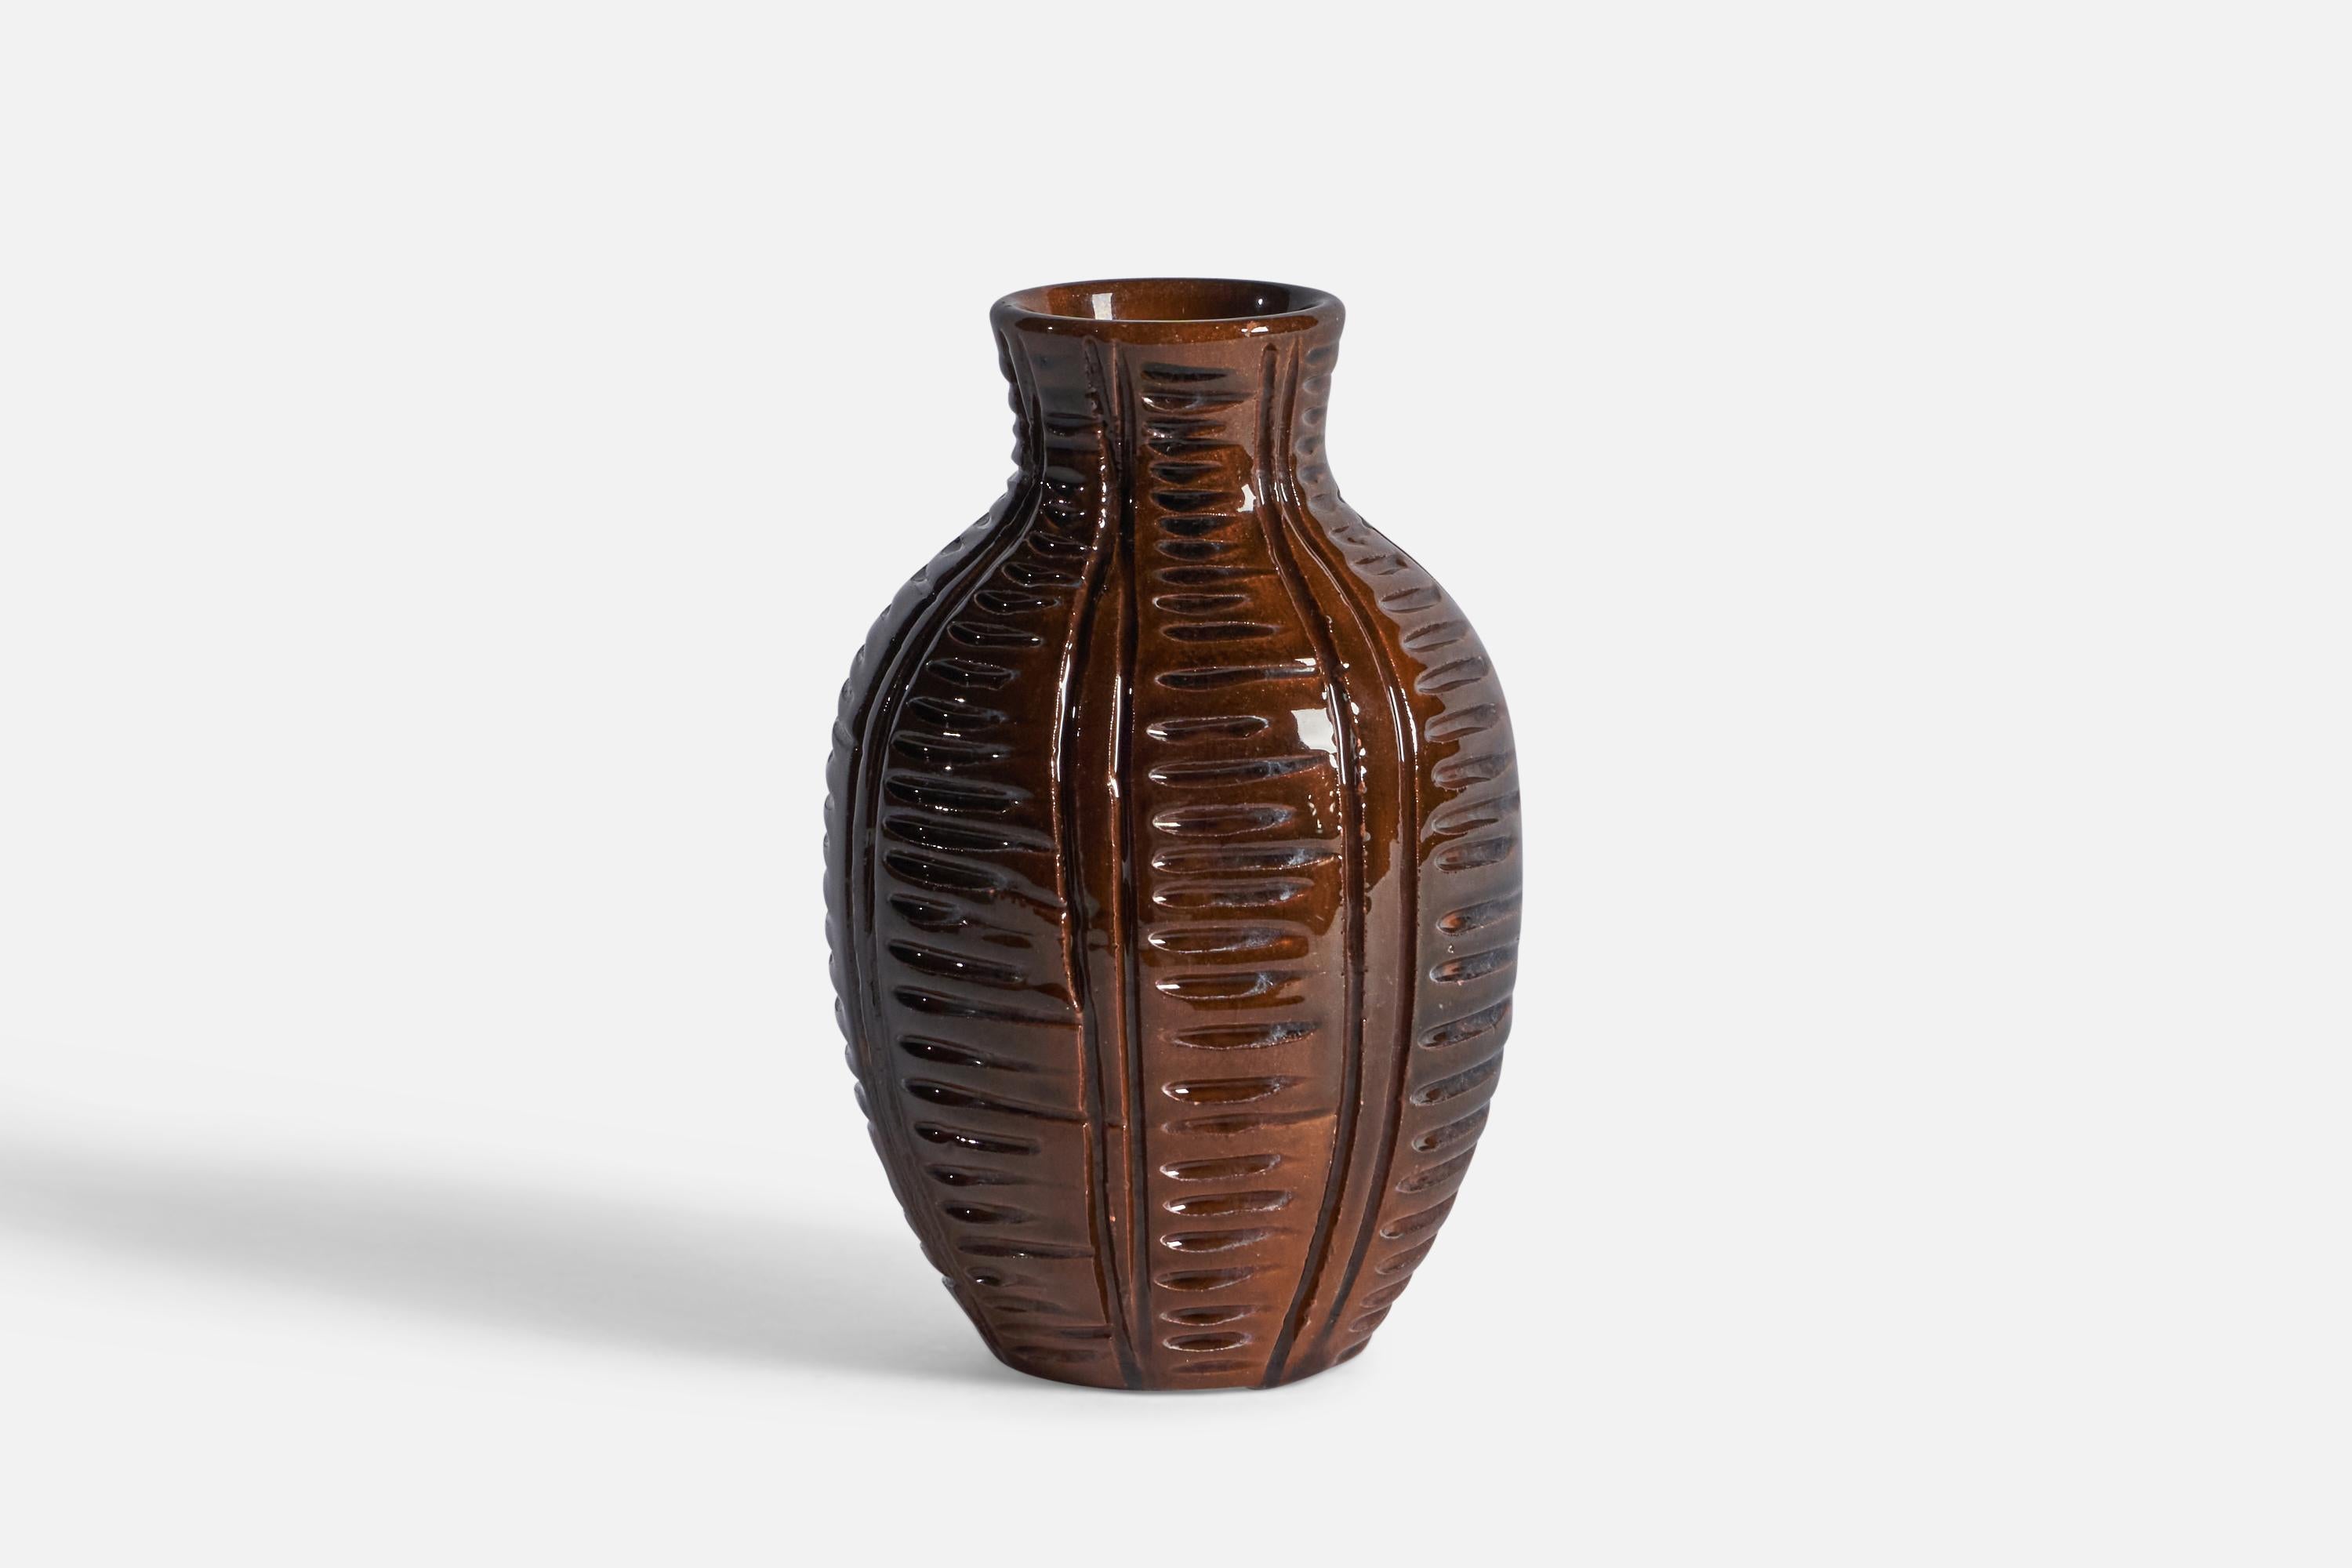 A brown-glazed incised vase designed and produced by Upsala Ekeby, Sweden, c. 1950s.